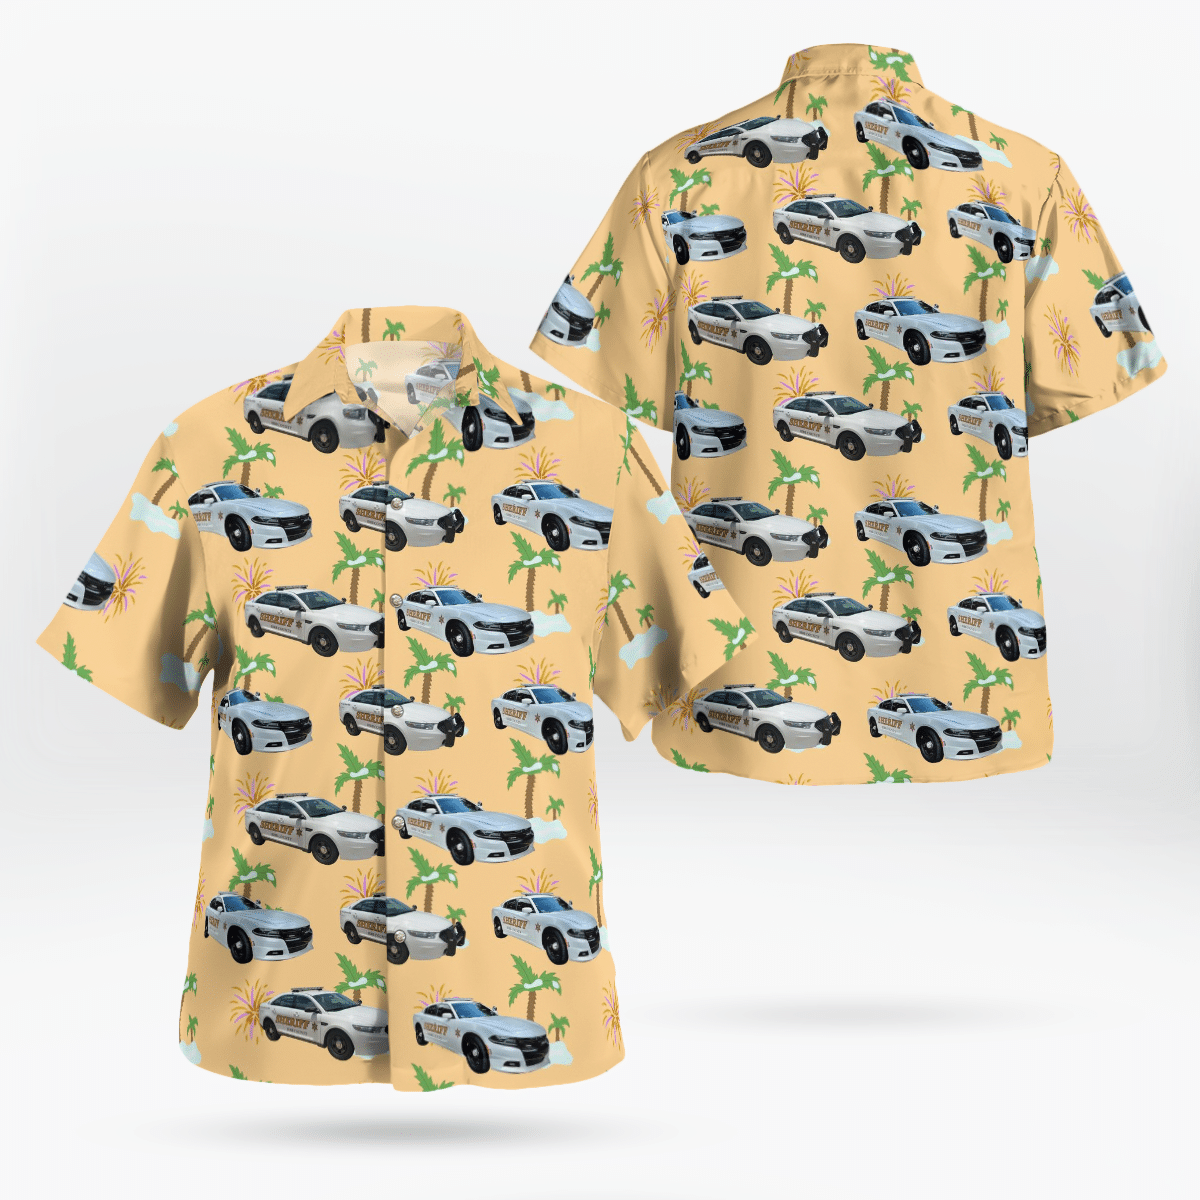 Why don't you order Hot Hawaiian Shirt today? 125